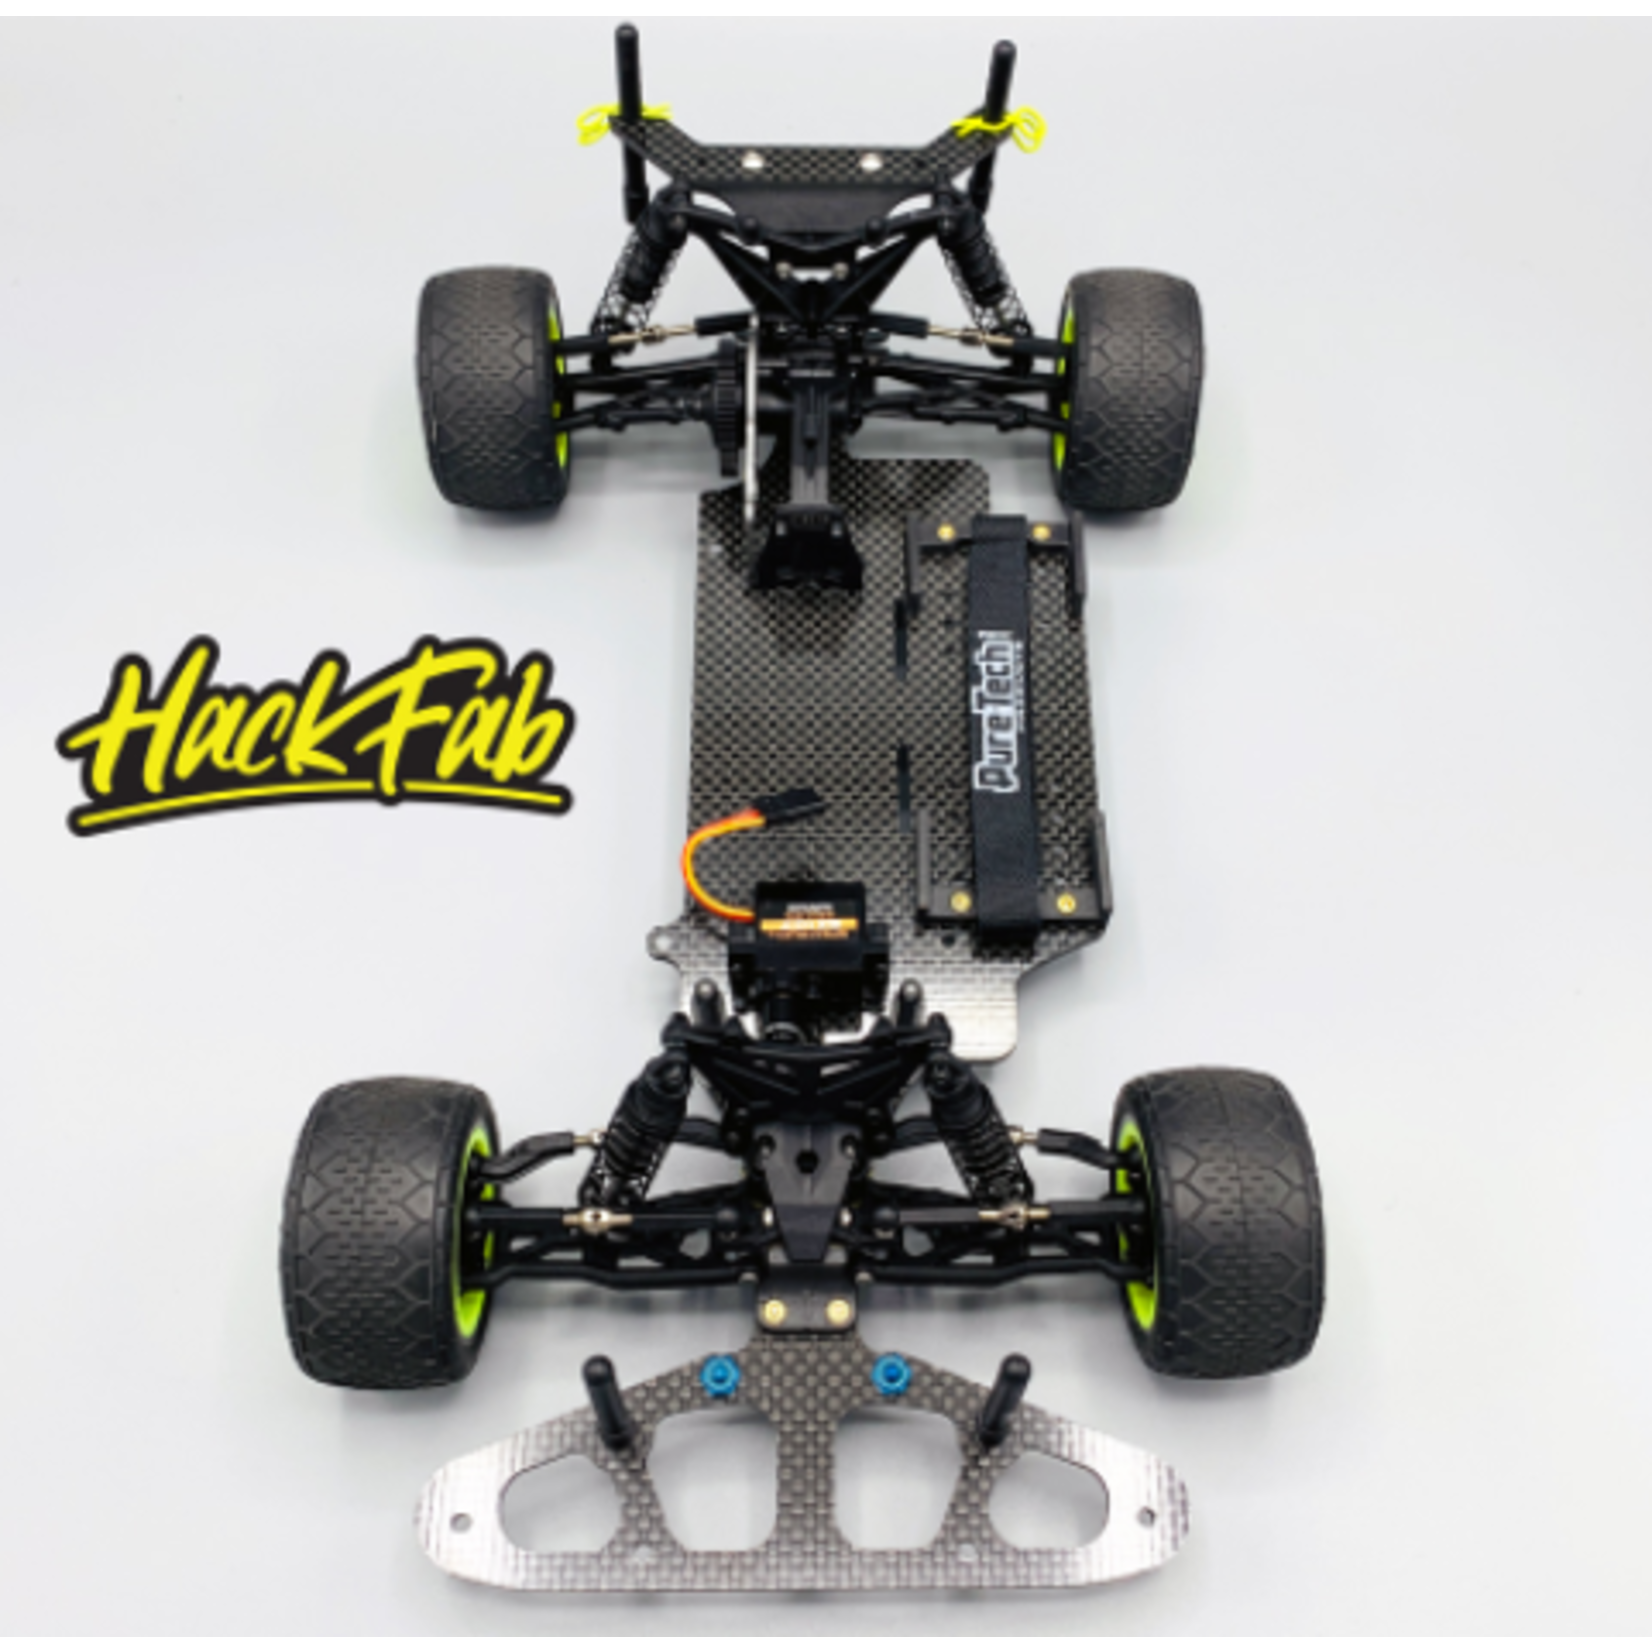 Hackfab Losi Mini-T 2.0/B Late Model Oval chassis conversion kit V2.1